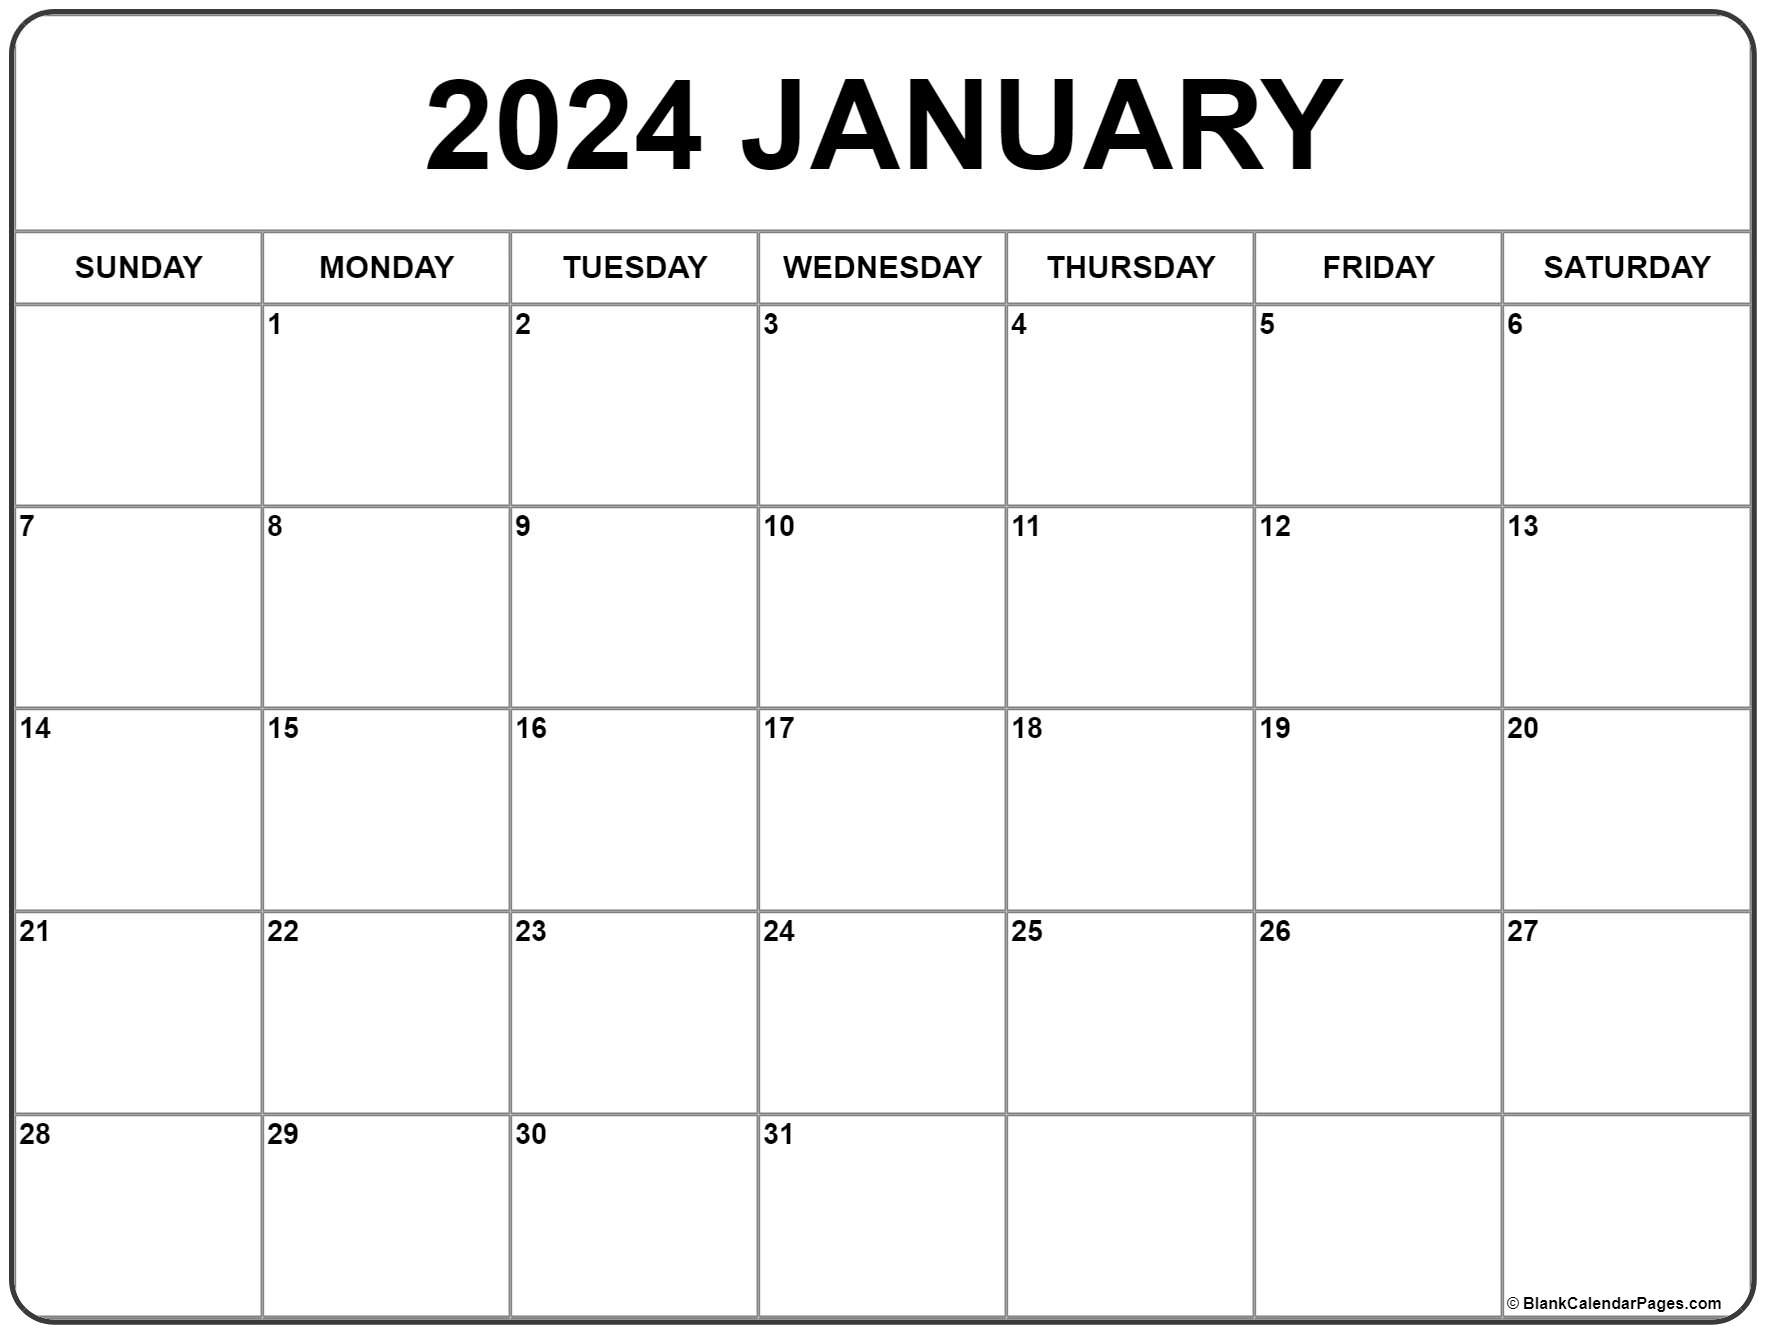 January 2024 Calendar | Free Printable Calendar for 2024 Monthly Calendar Printable Free